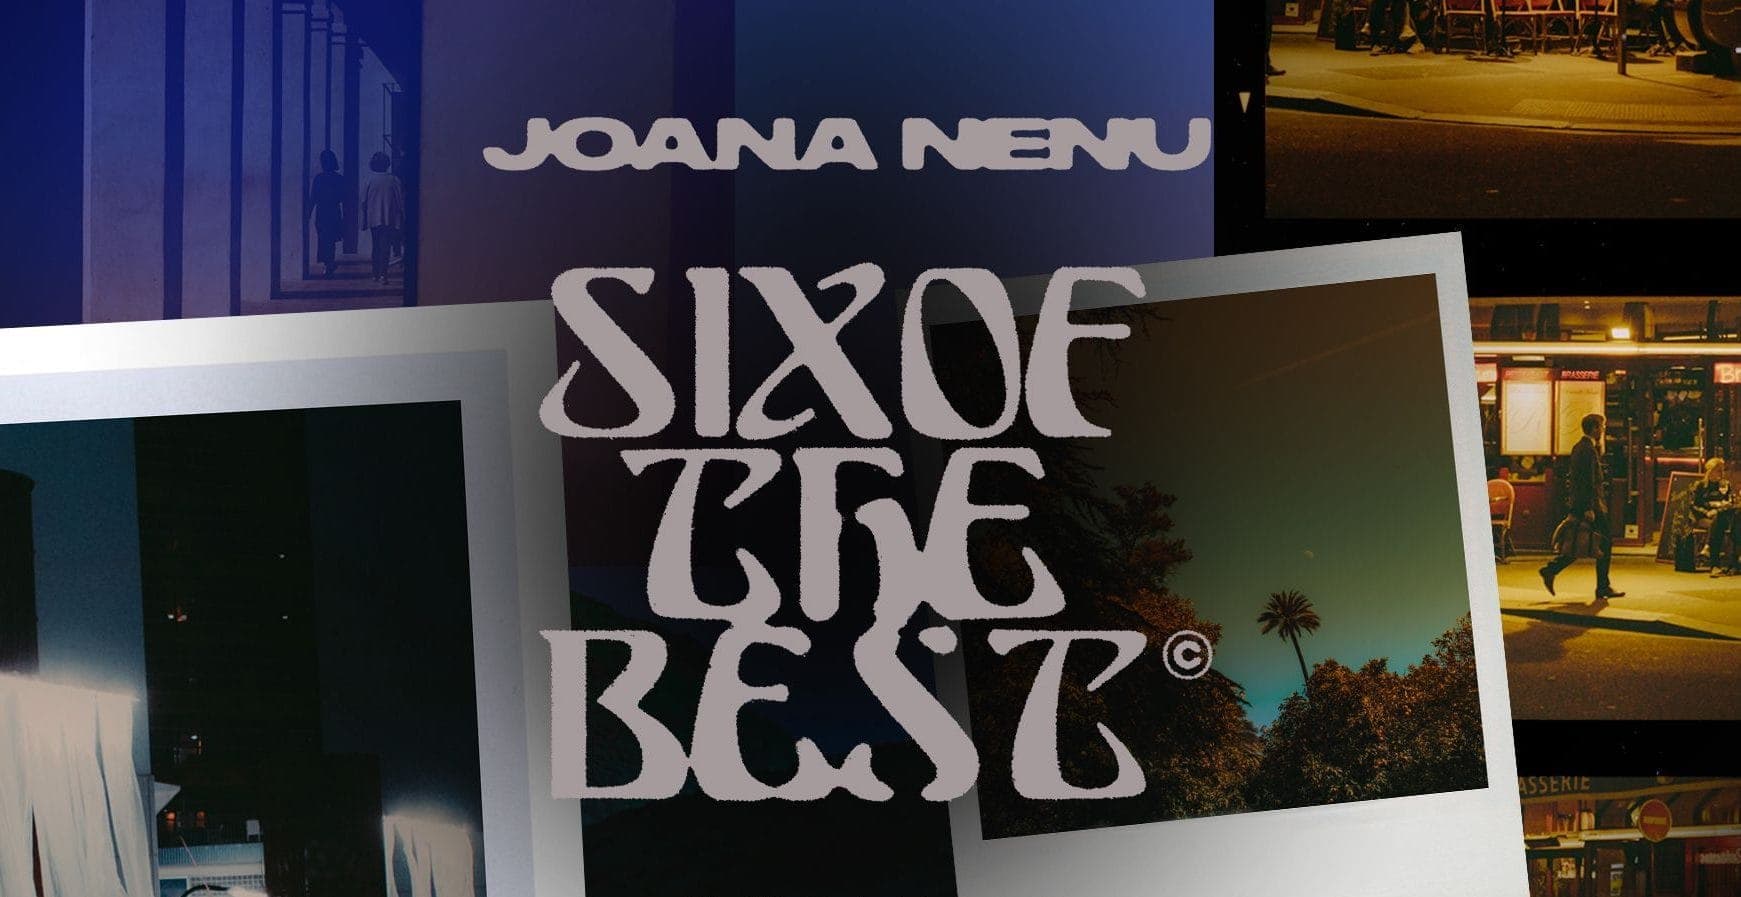 joana nenu six of the best